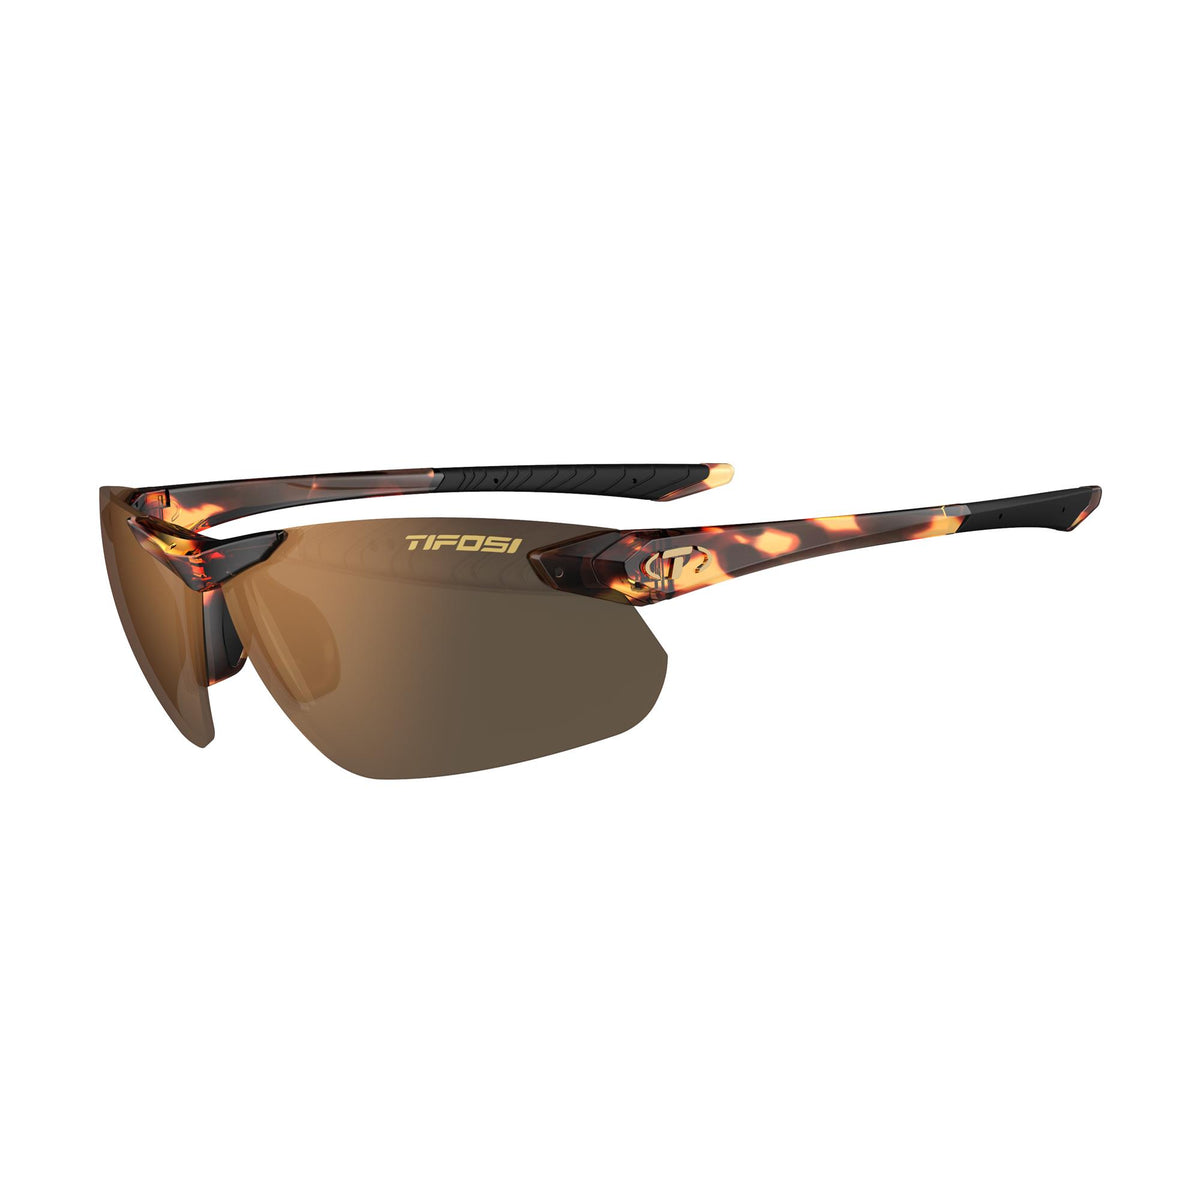 Tifosi Seek FC 2.0 Single Lens Sunglasses Tortoise Brown